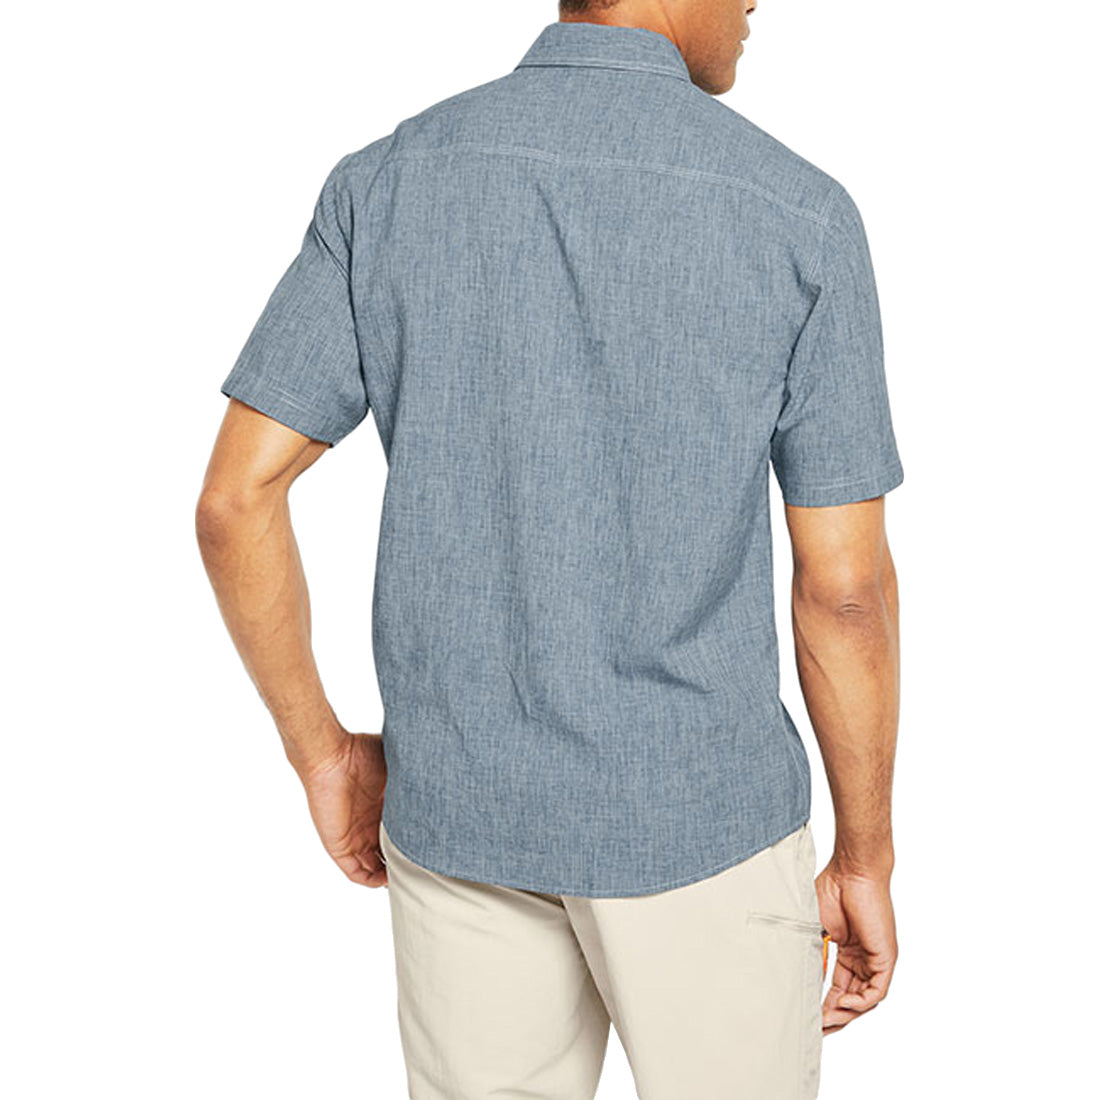 Orvis Tech Chambray Long Sleeve Work Shirt - Men's